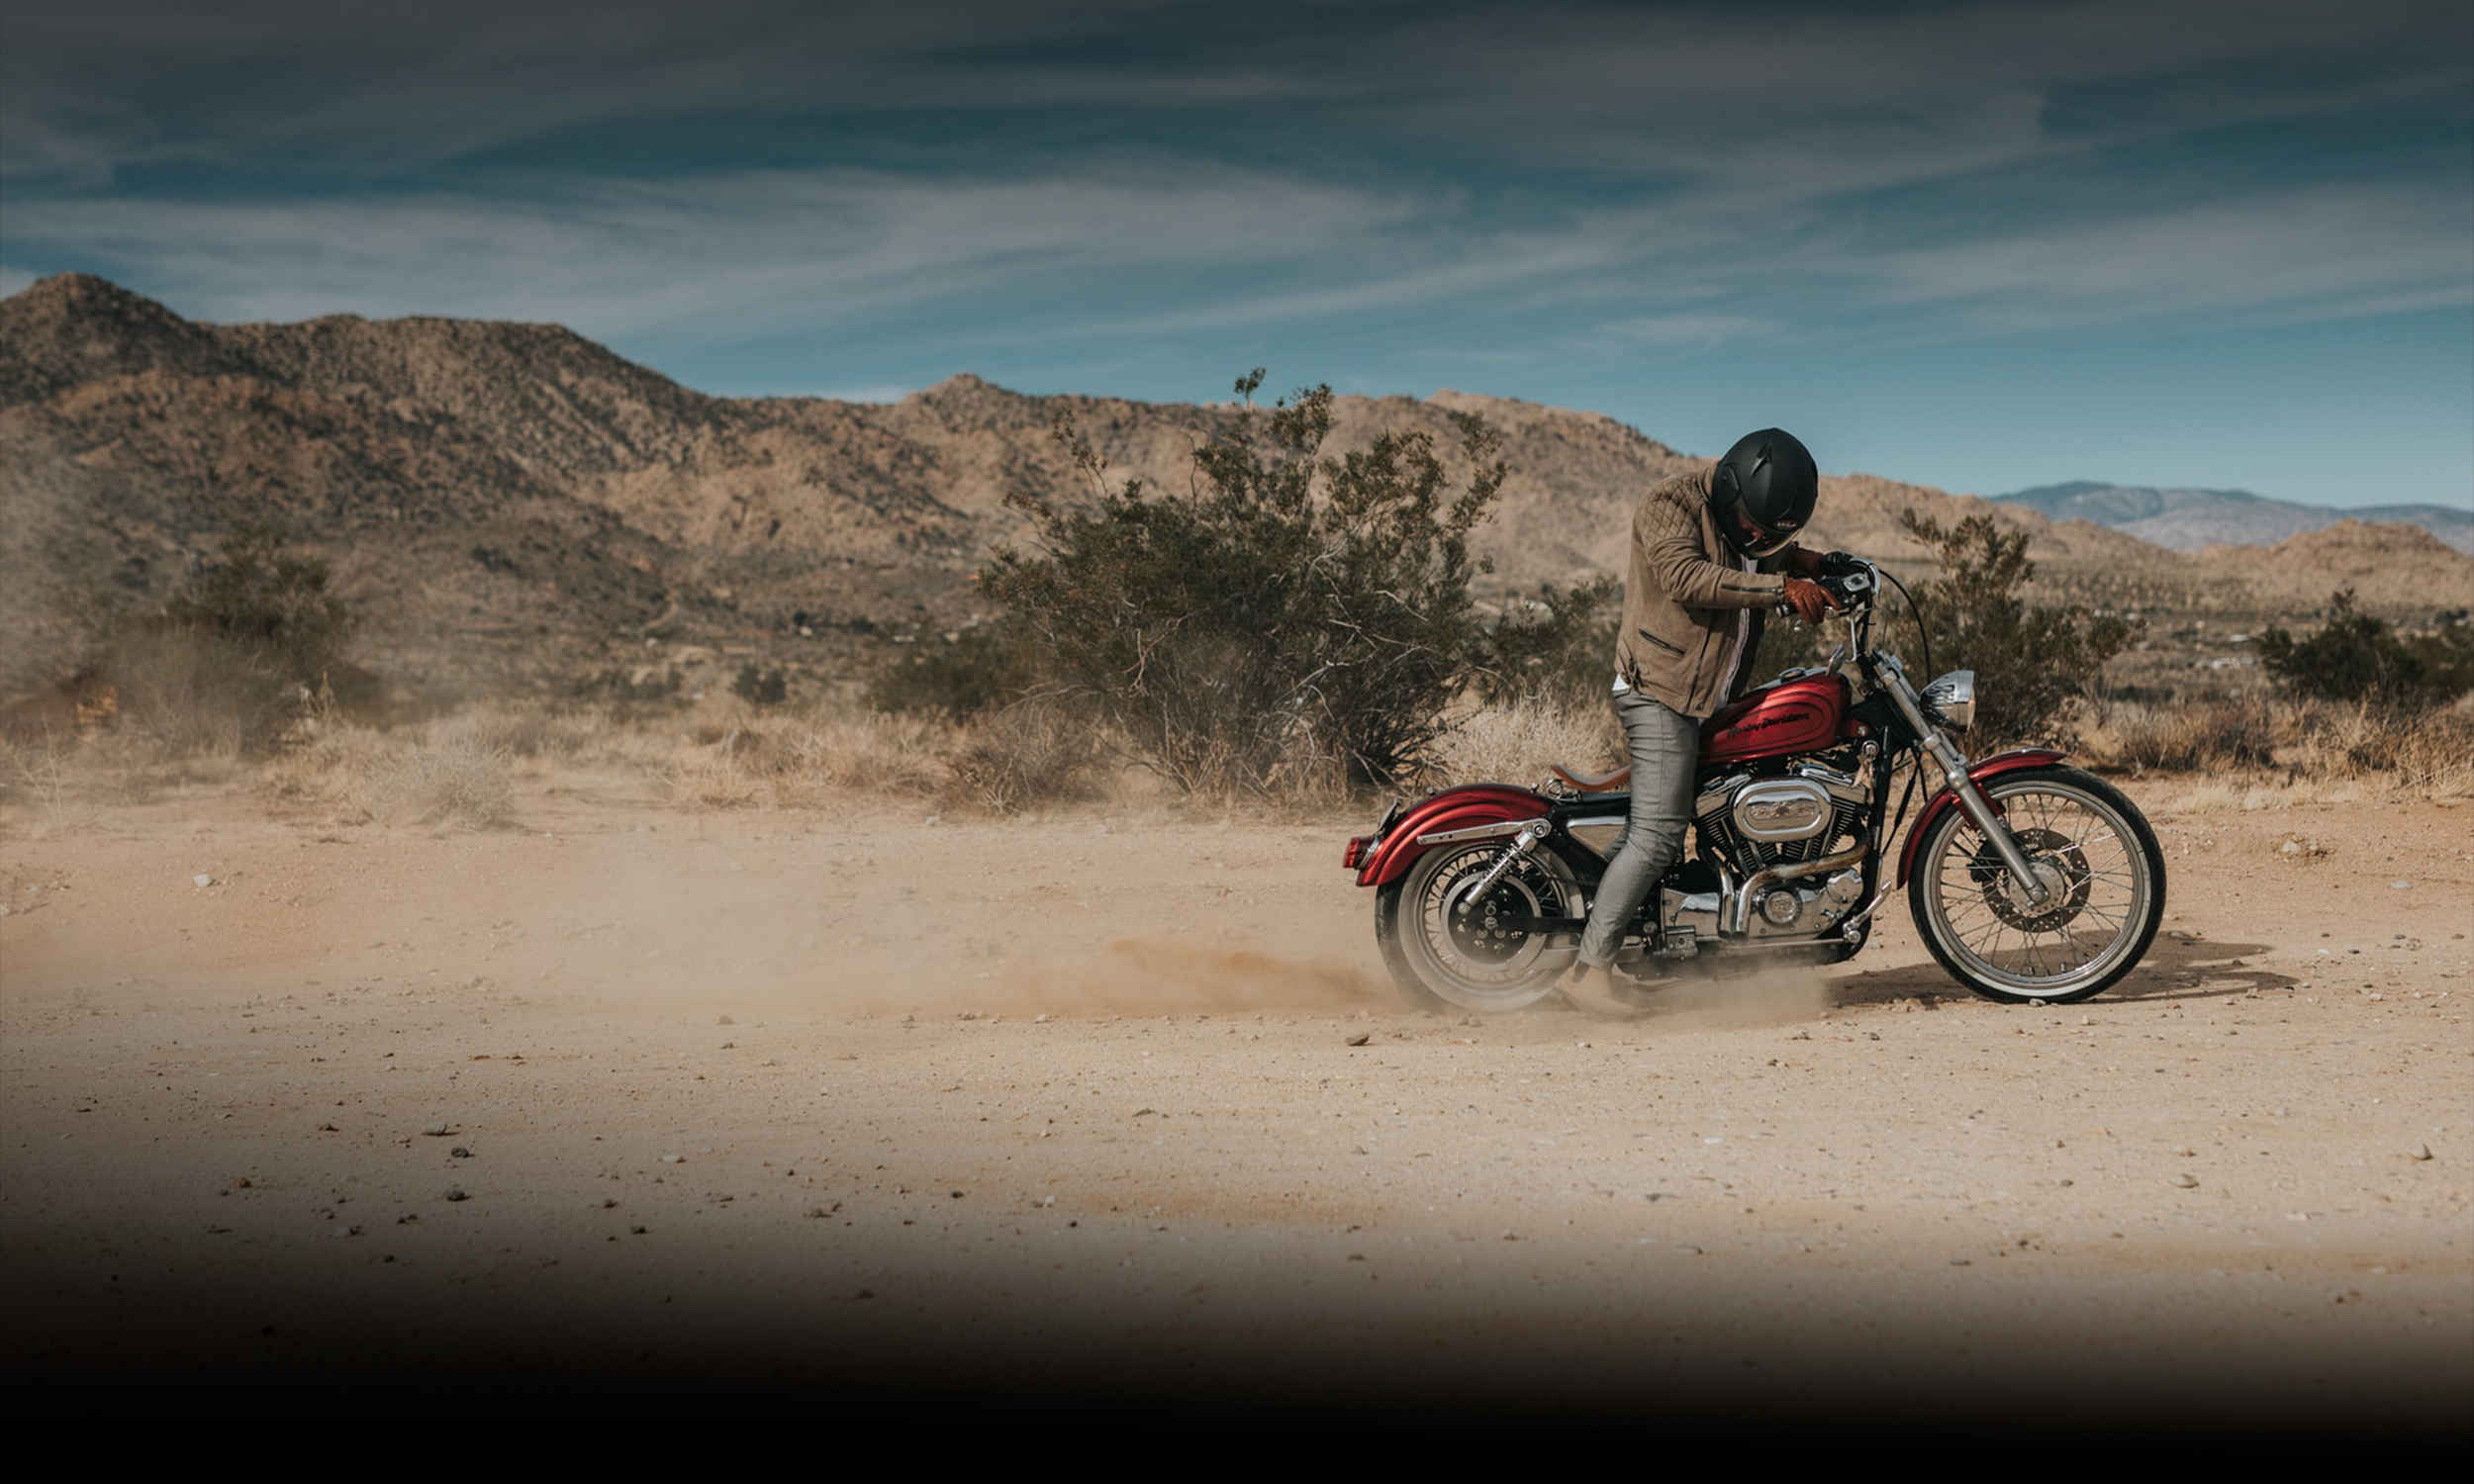 Harley-Davidson motorcycle rider in the desert